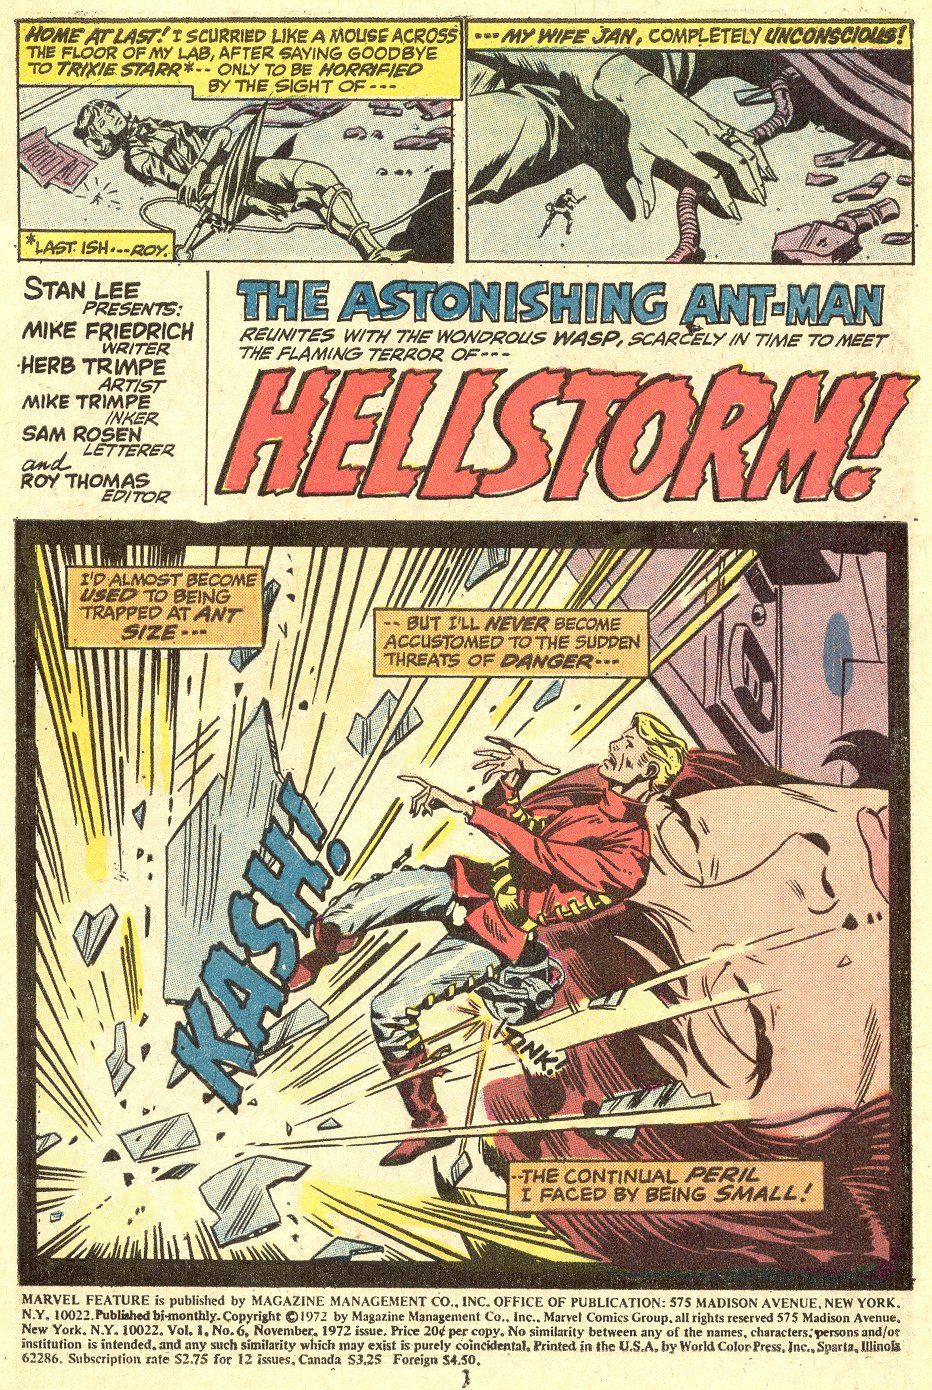 Ant-Man #1 1/100 Herb Trimpe Remastered Variant – Coliseum of Comics